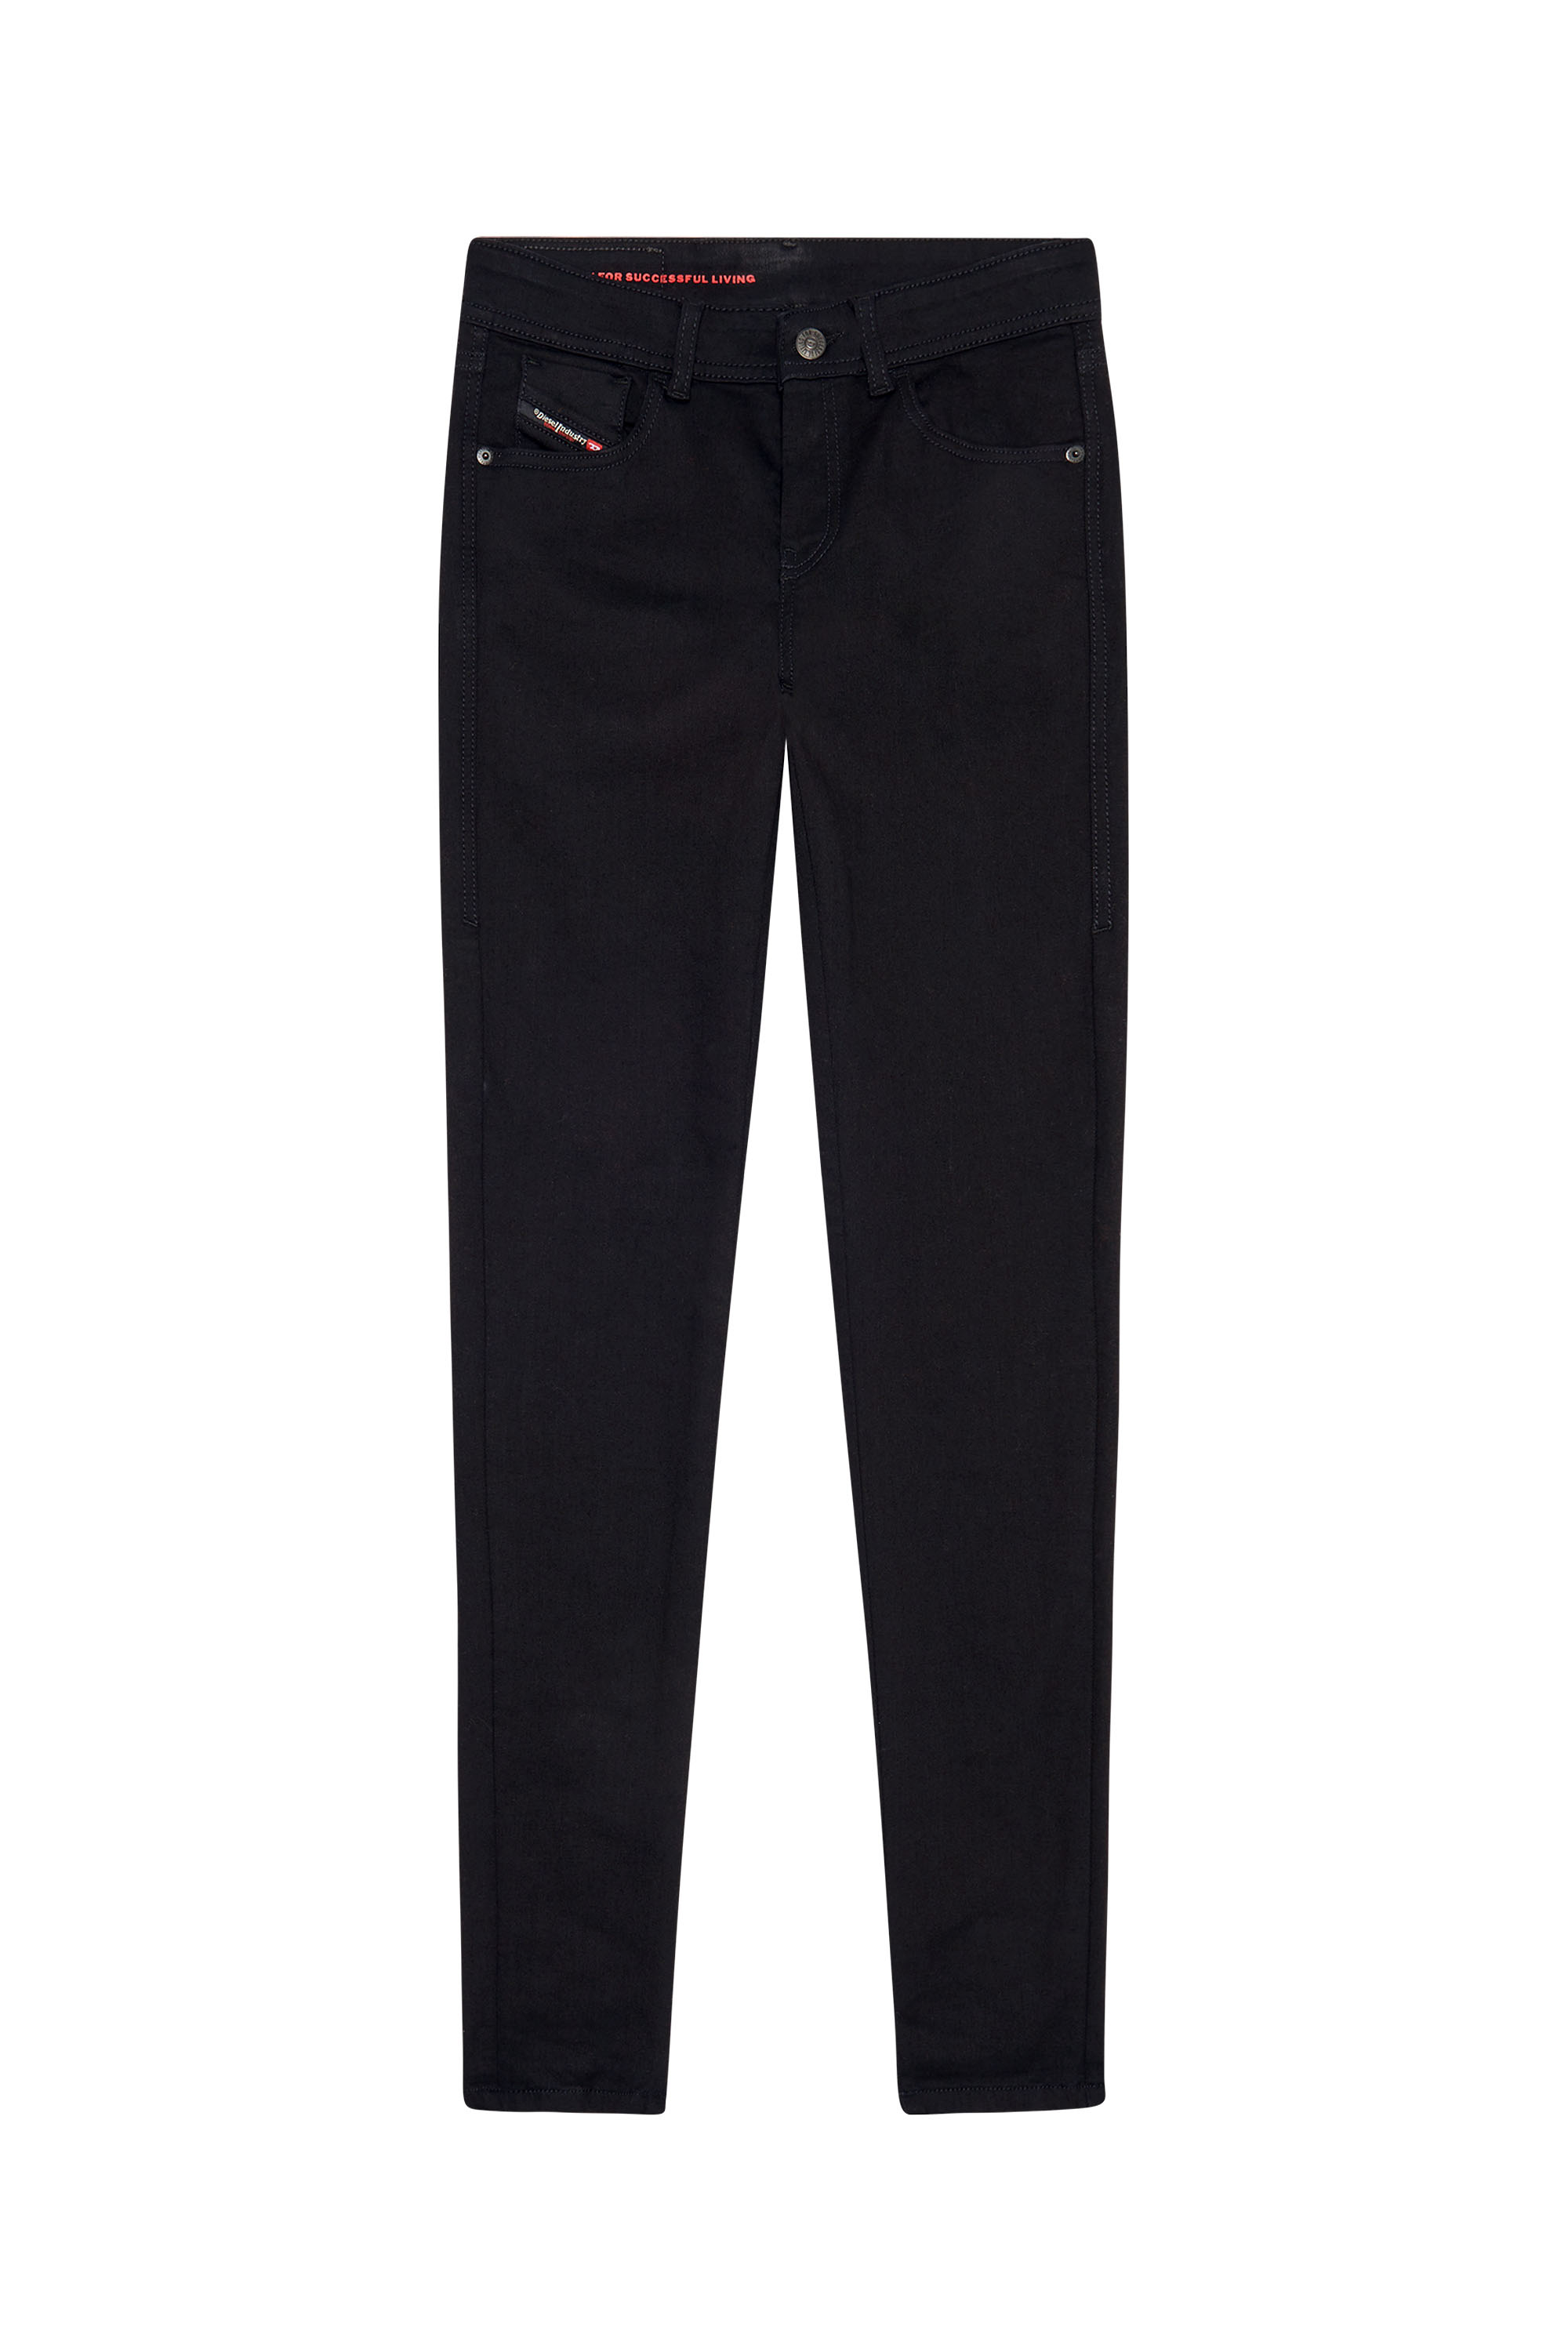 2017 SLANDY 069EF Super skinny Jeans, Black/Dark grey - Jeans